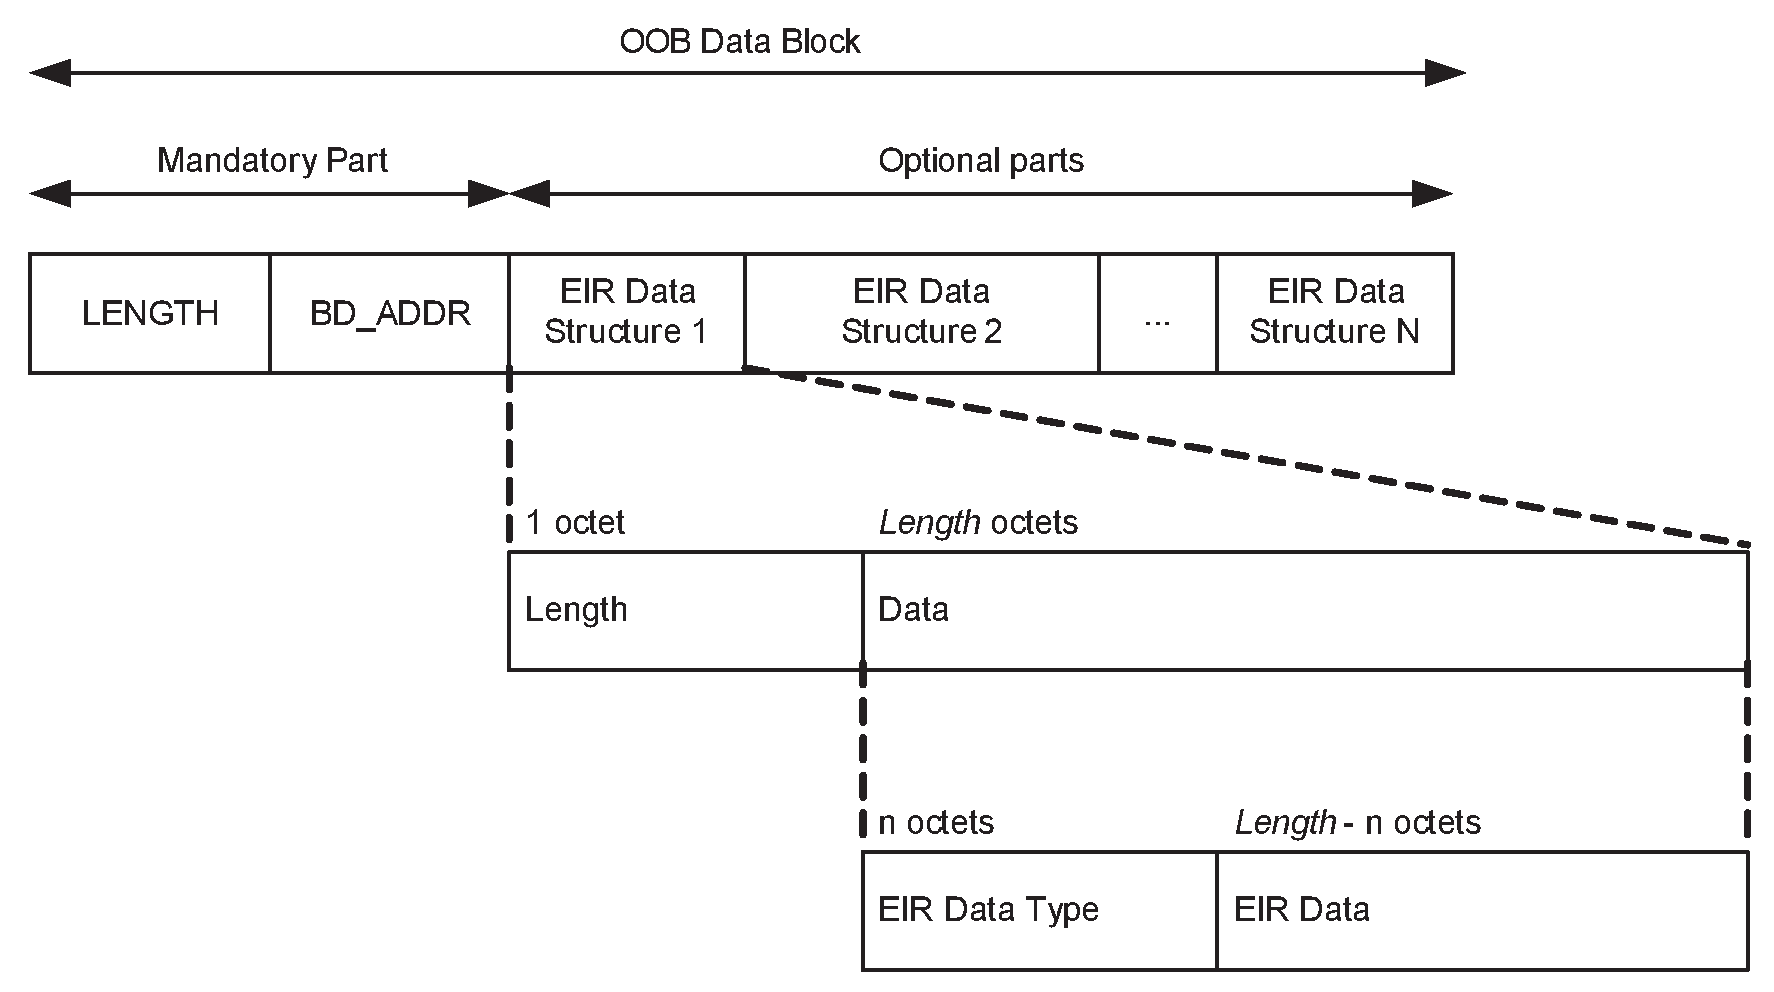 OOB data block format